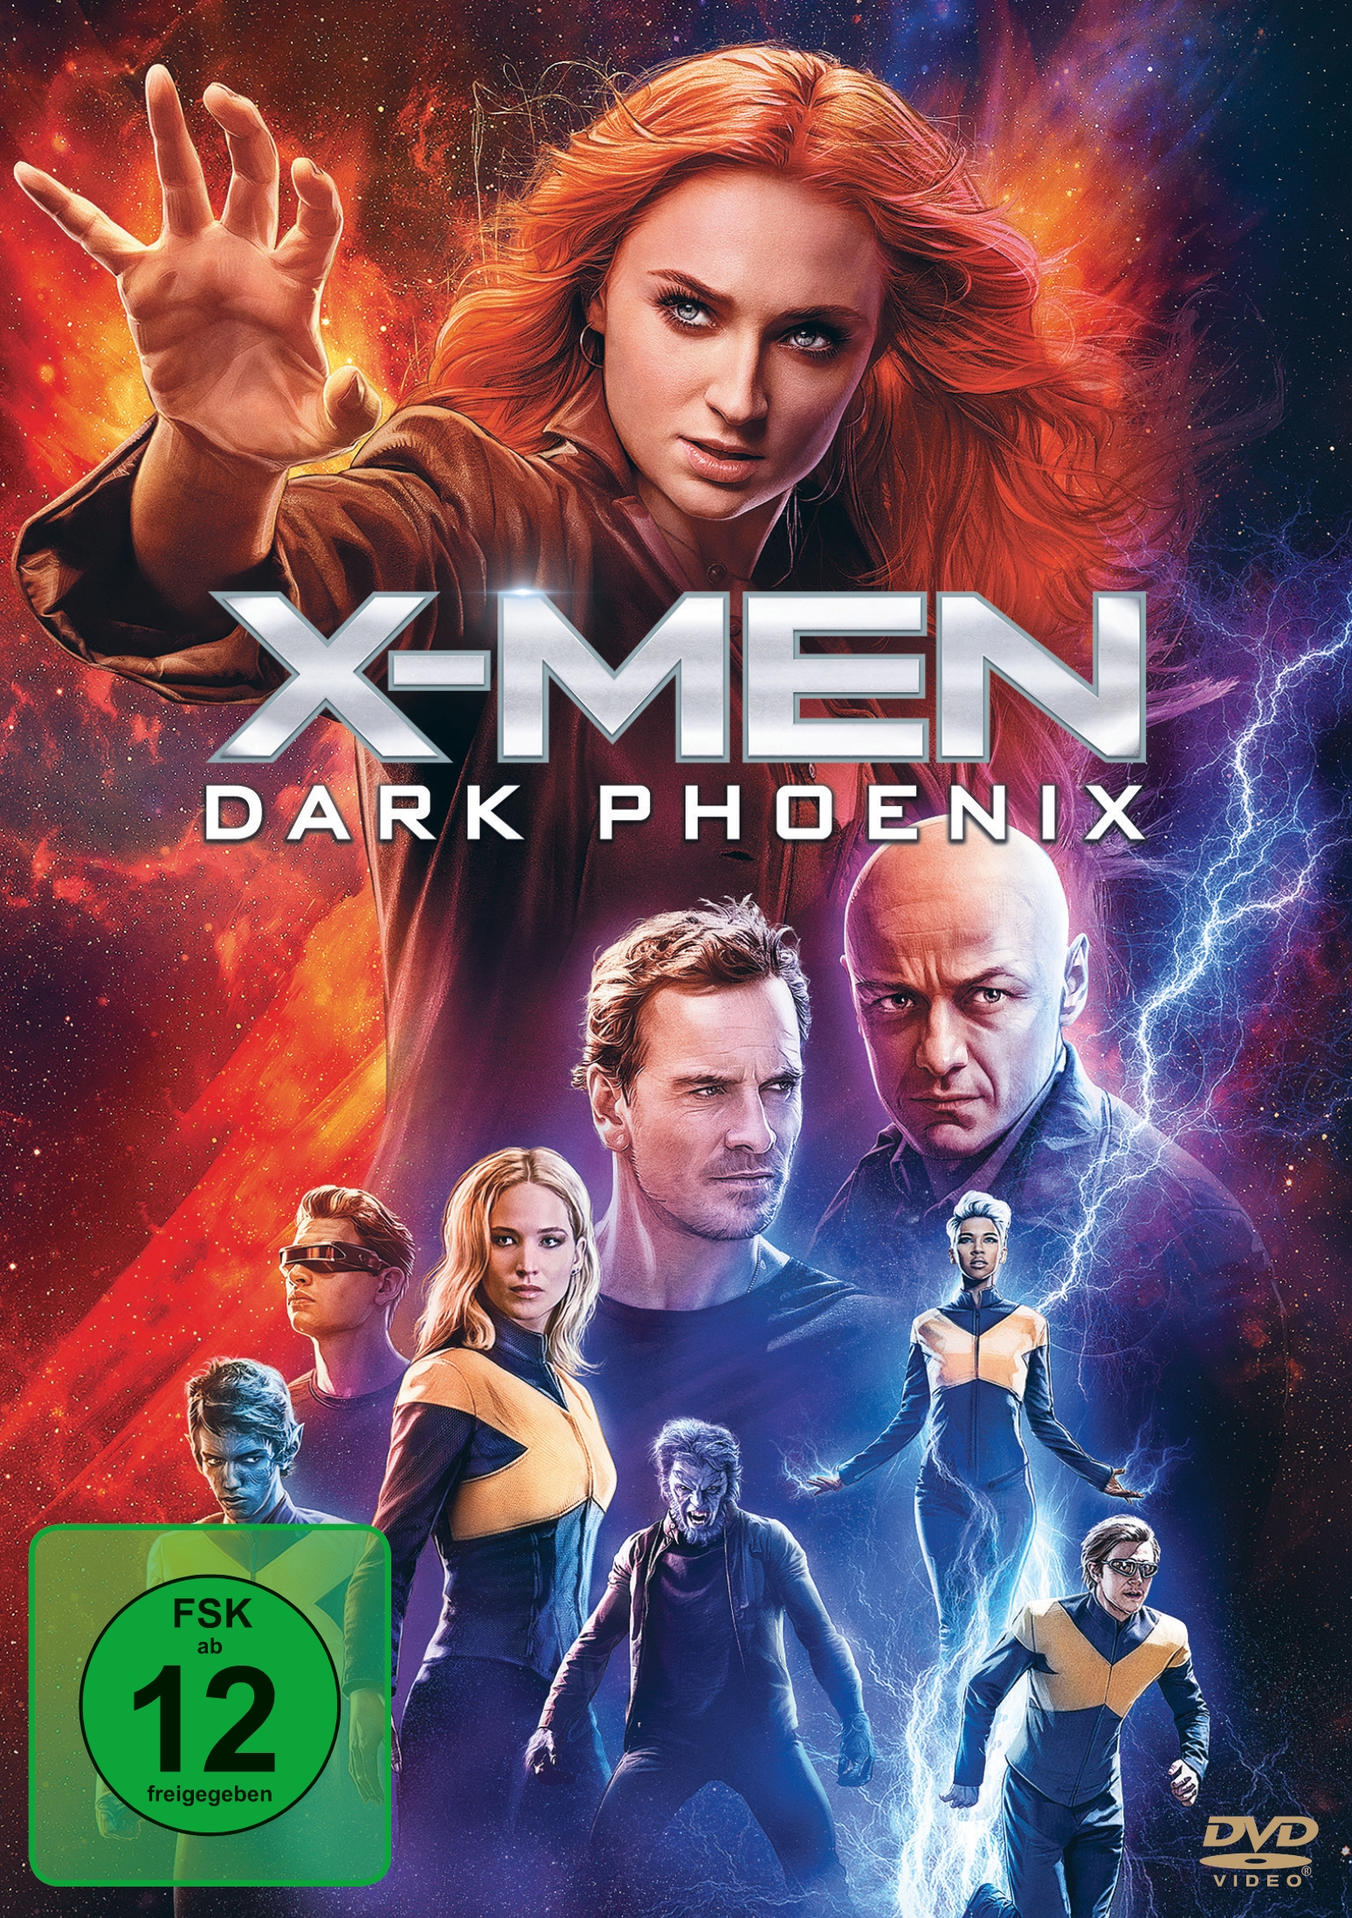 DVD Dark Phoenix X-Men: